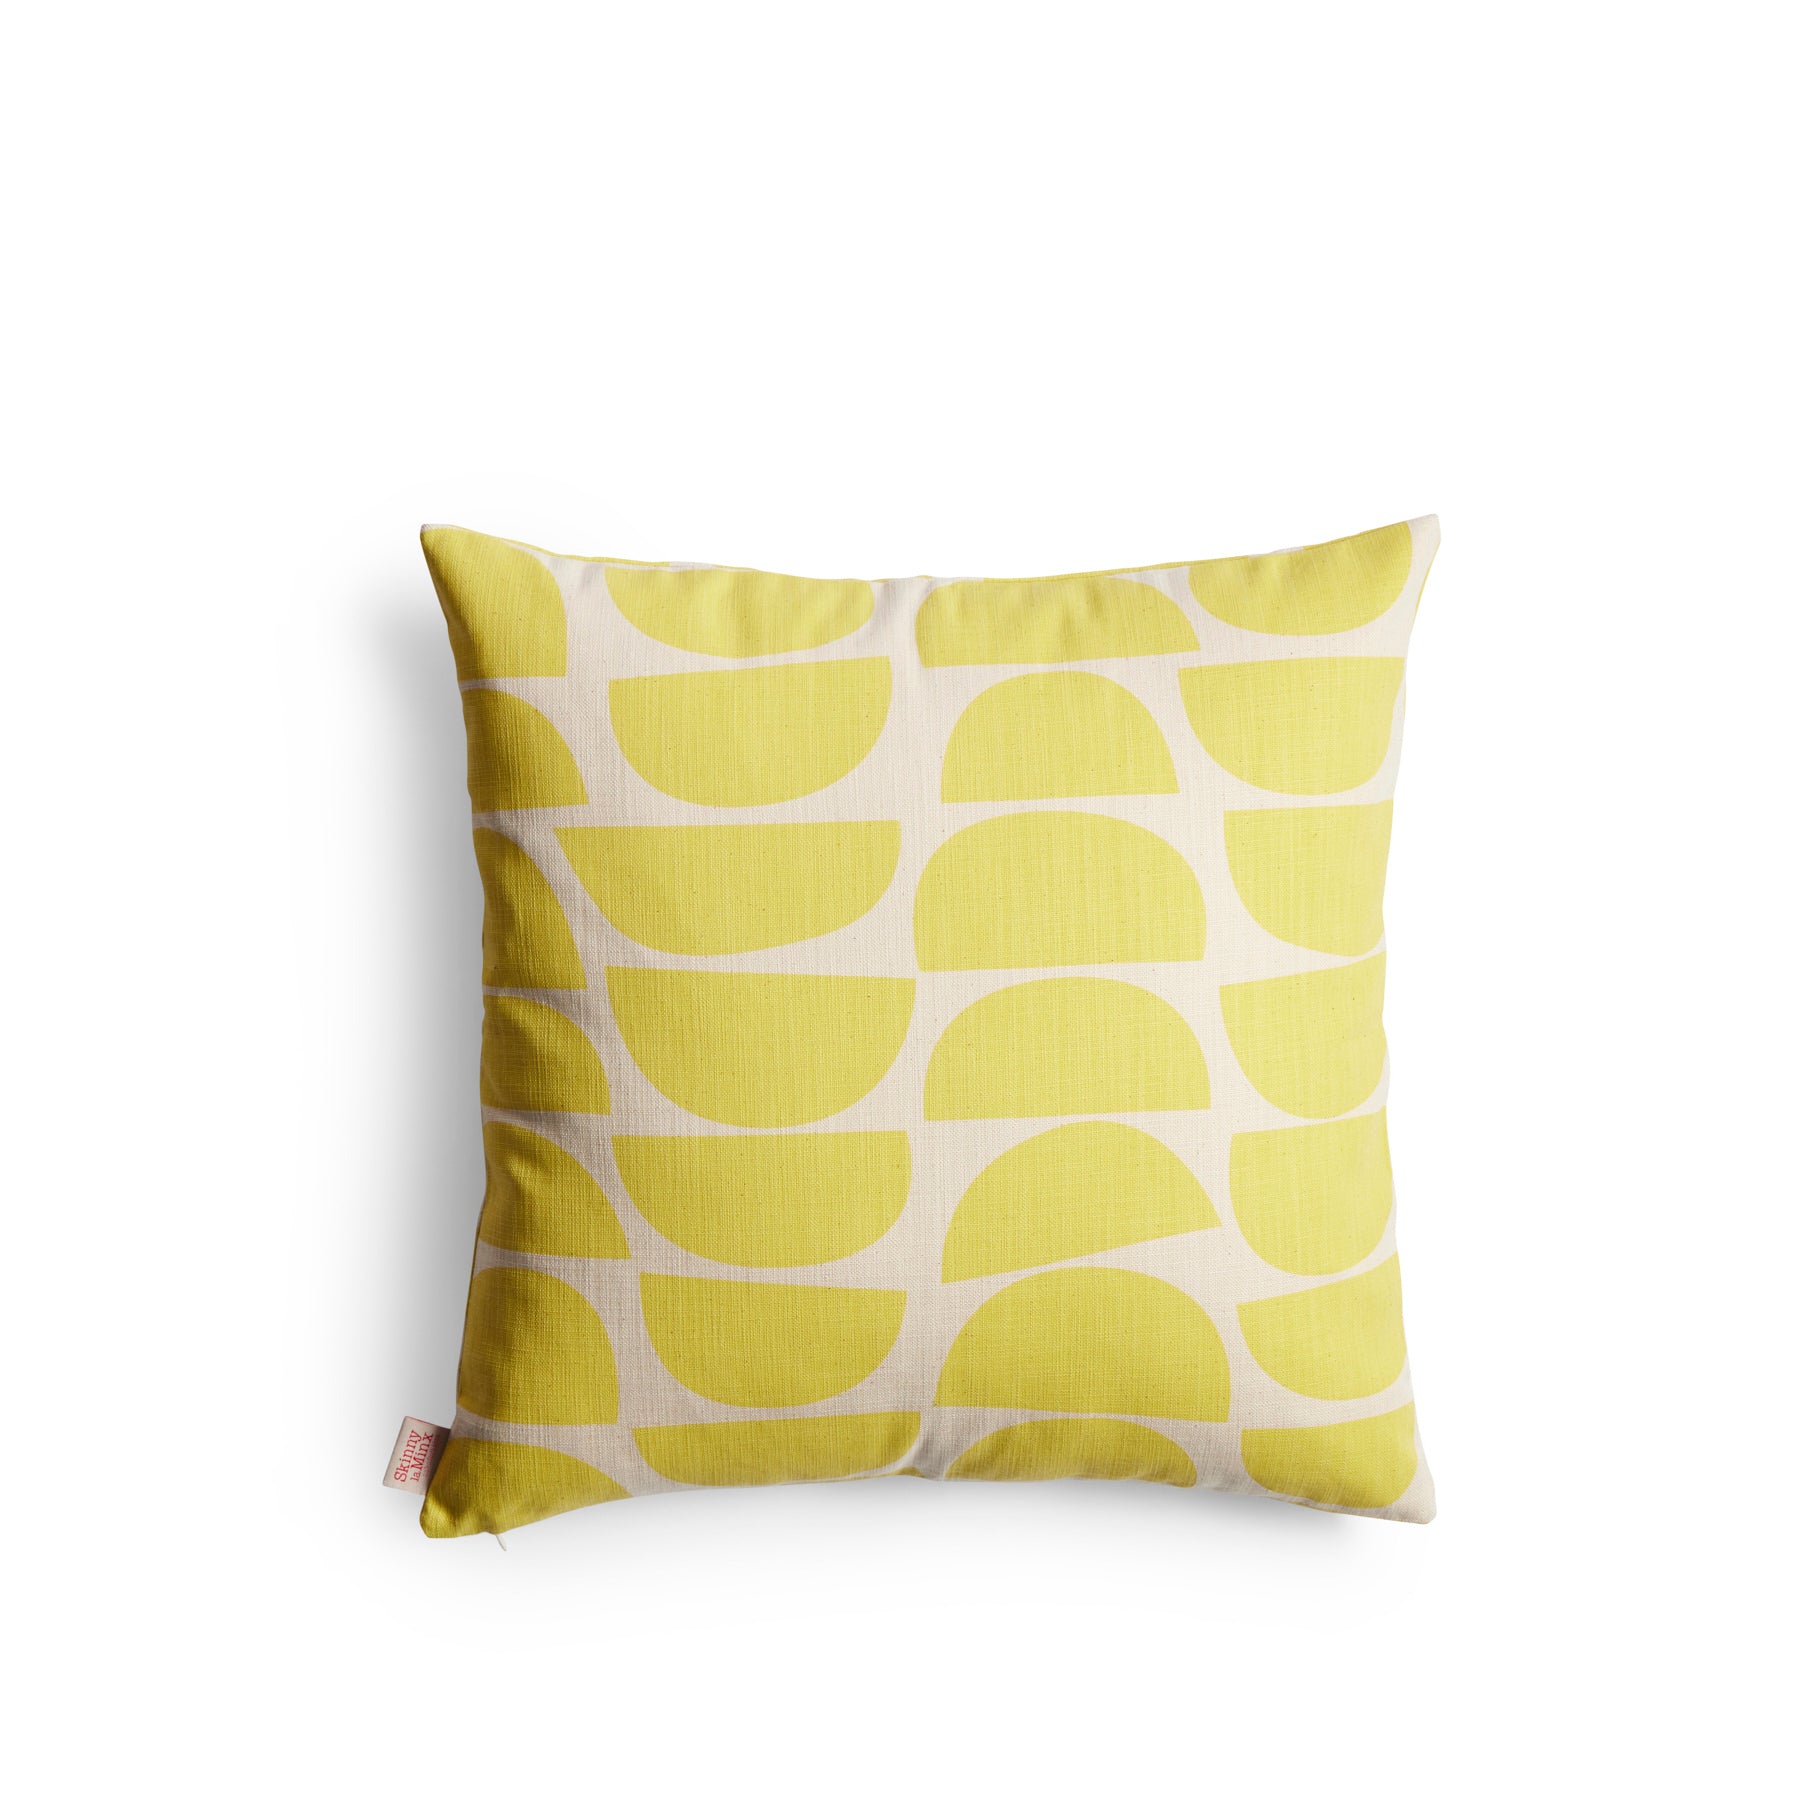 Bowls Cushion in Lemon Slice Zoom Image 1